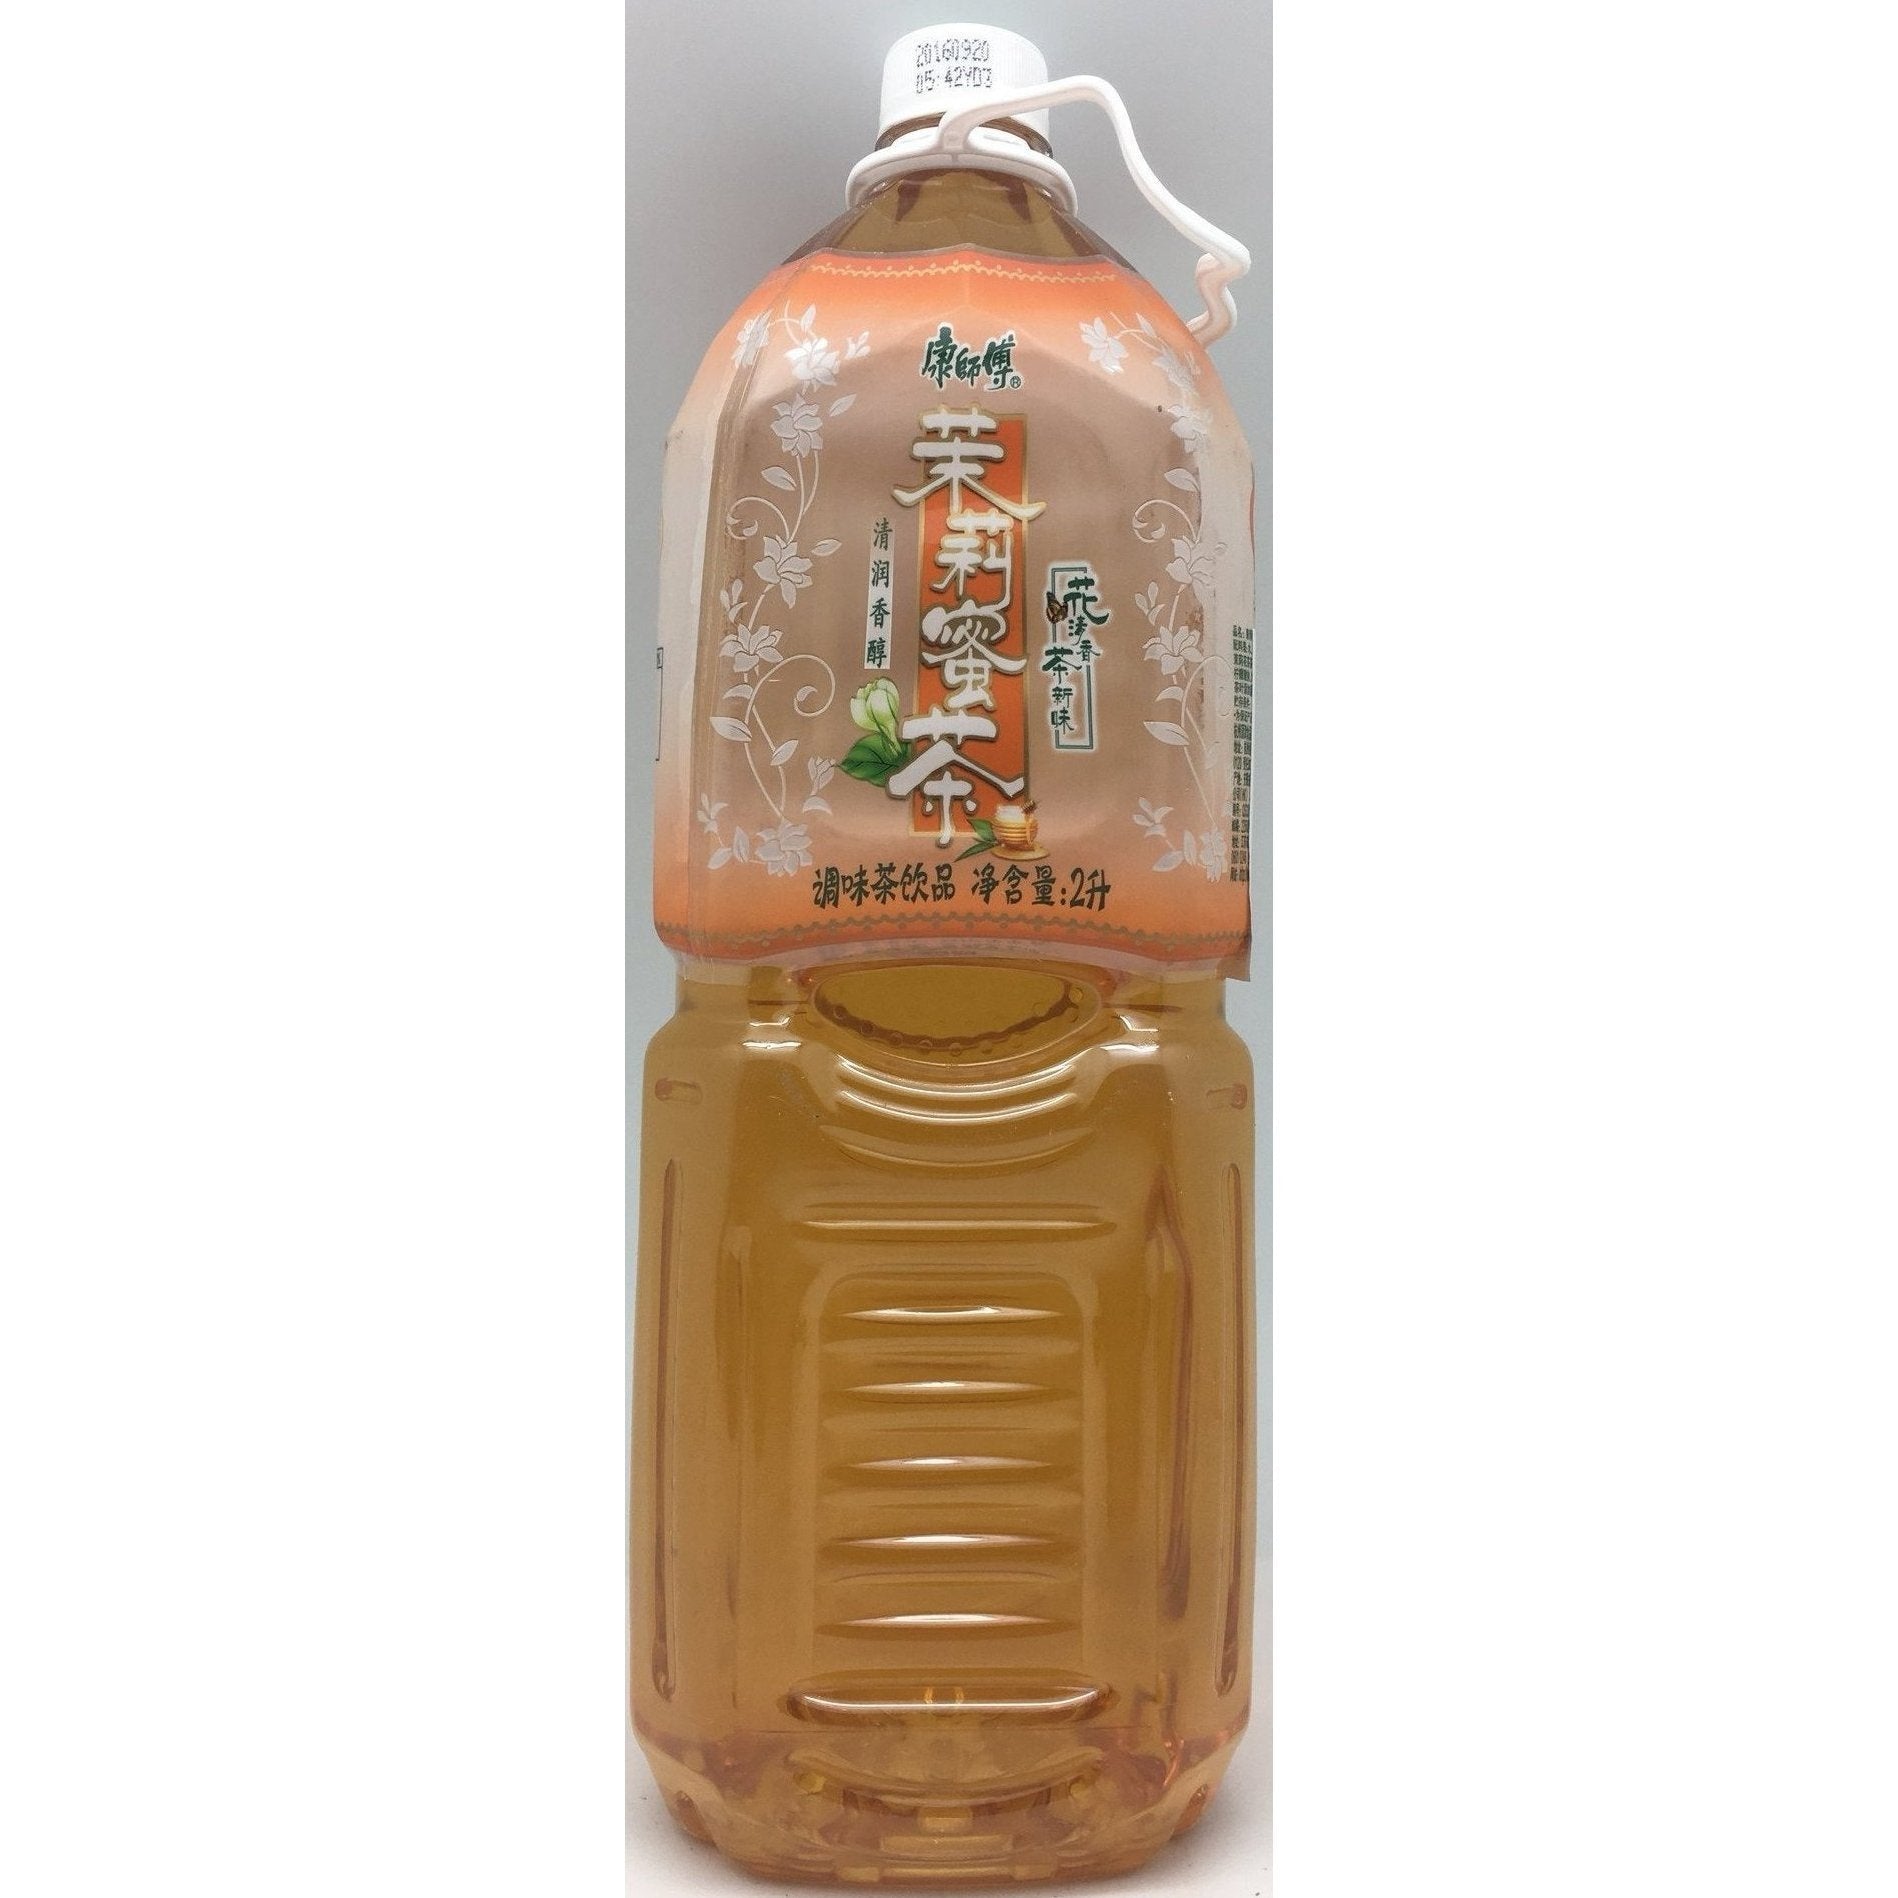 B002HL Kon Brand - Honey Jasmine Tea 2L - 6 bot/1ctn - New Eastland Pty Ltd - Asian food wholesalers